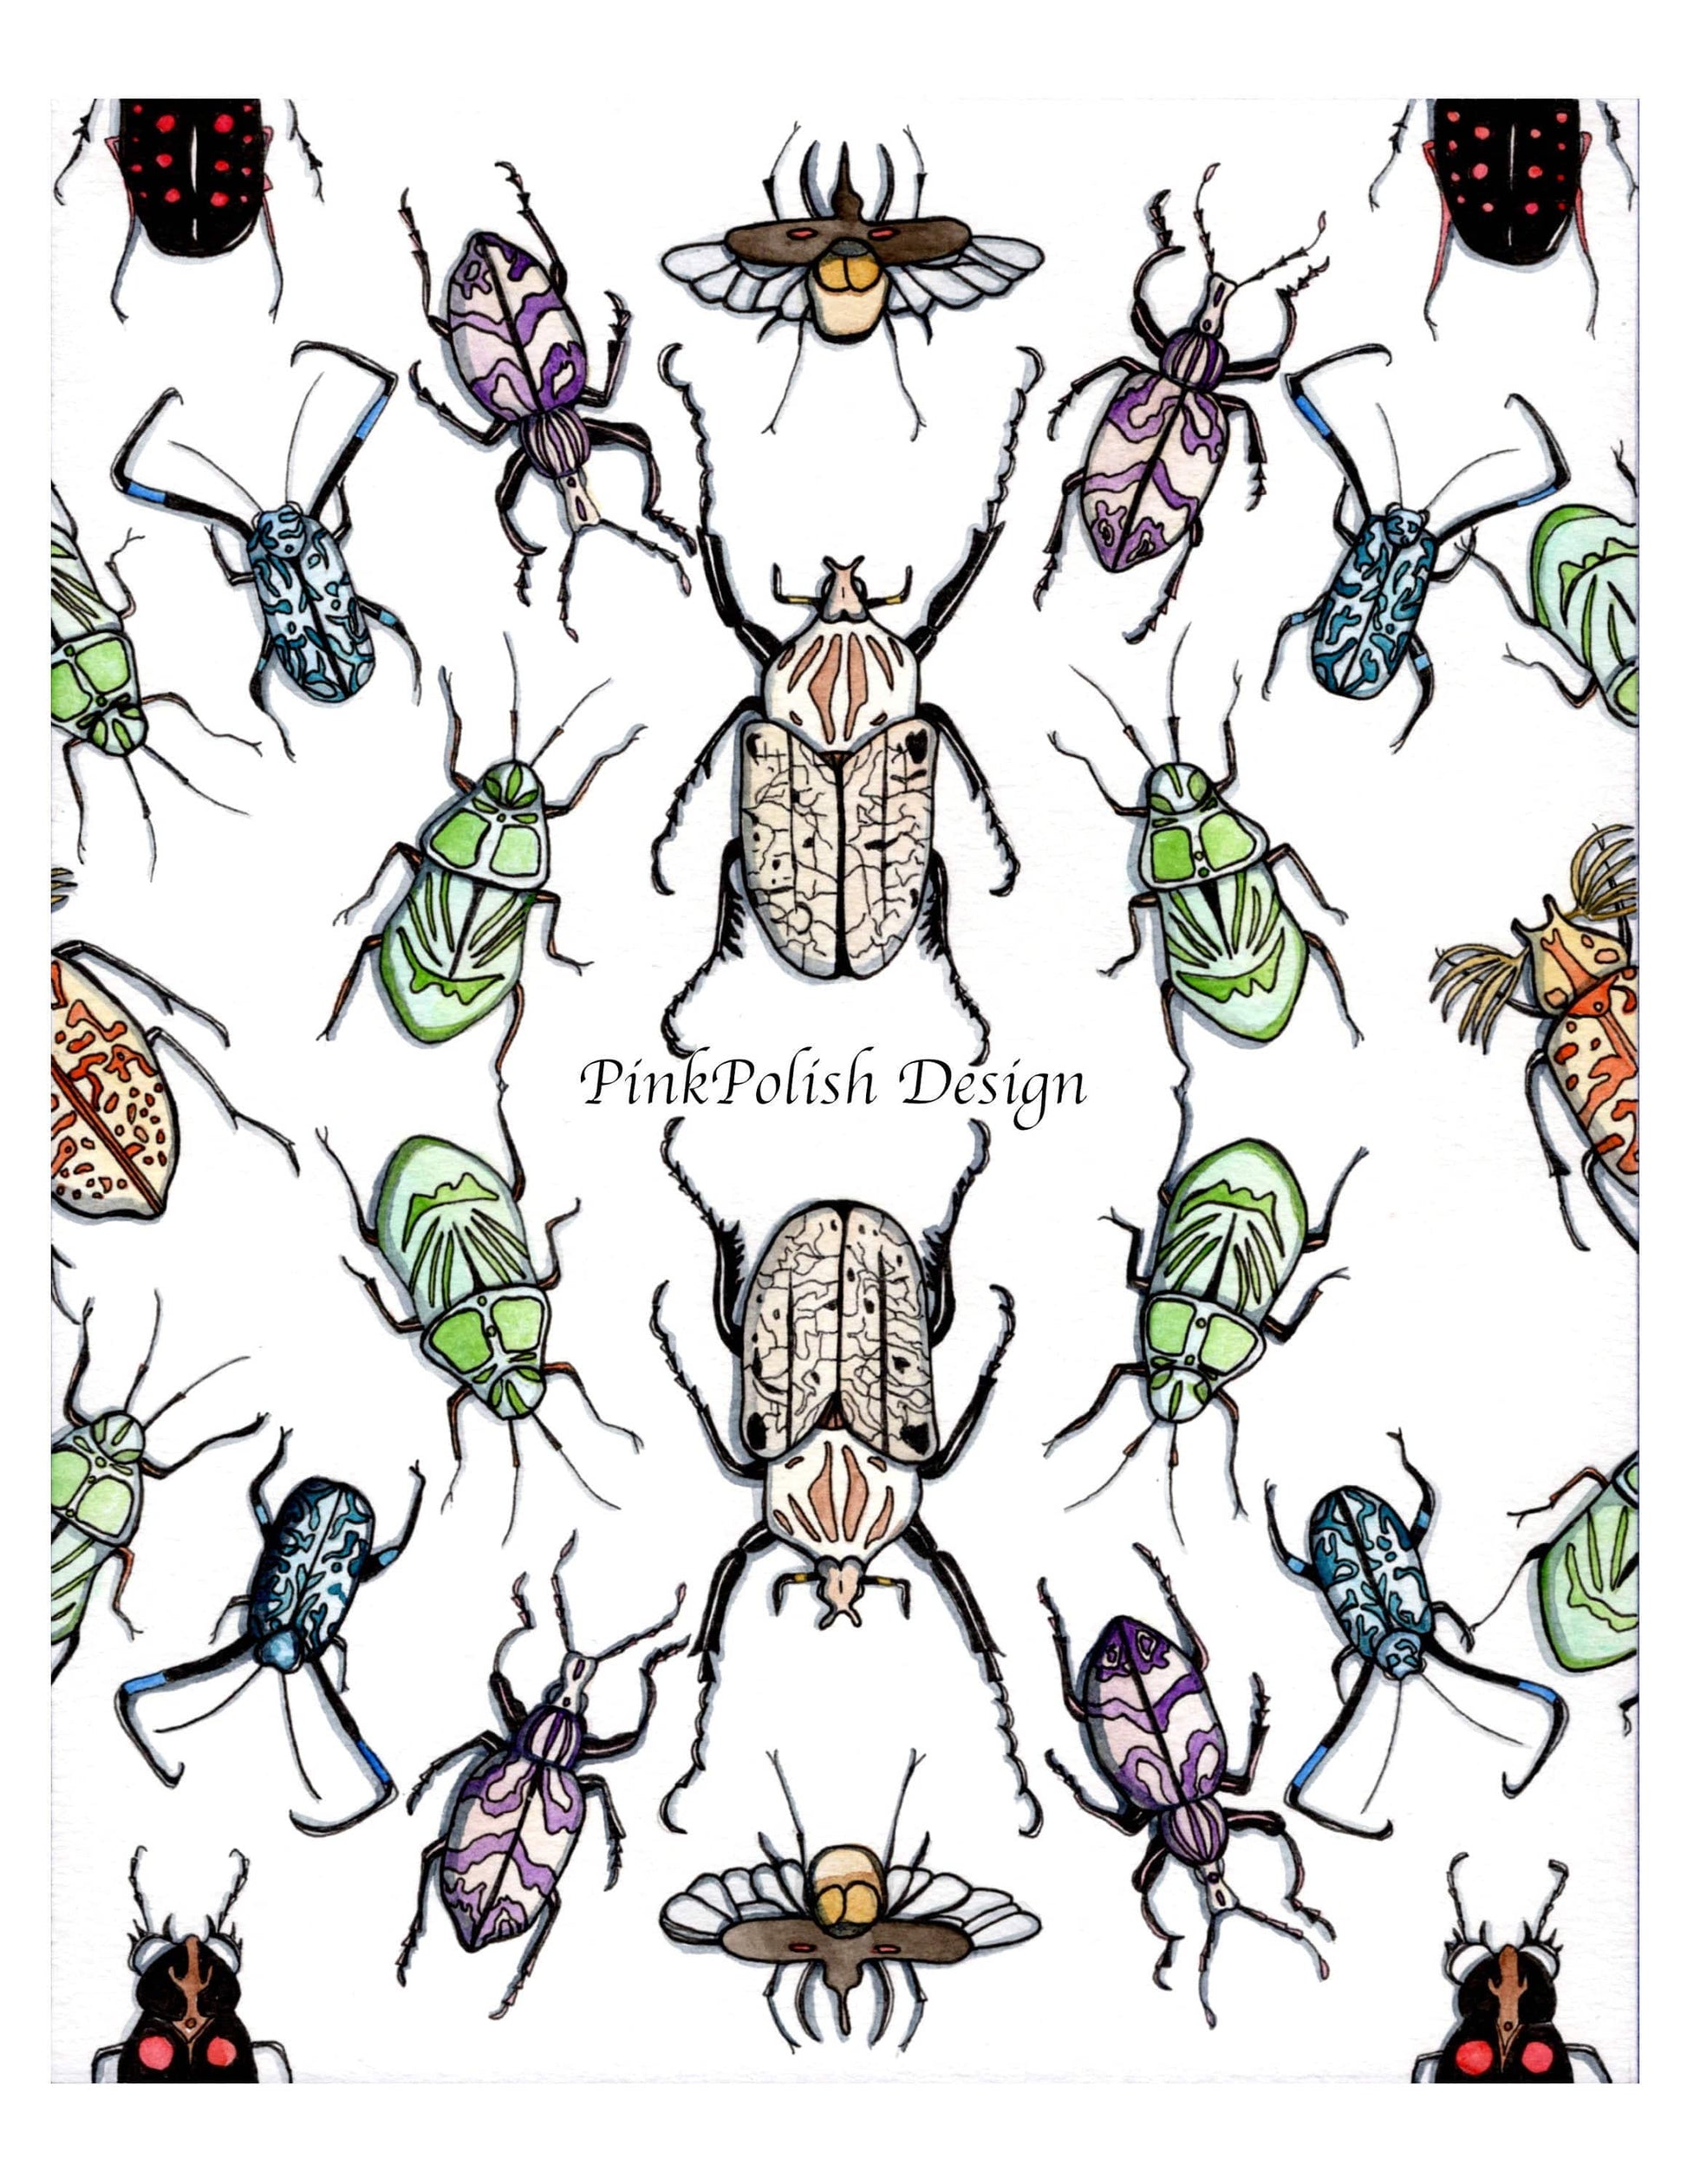 PinkPolish Design Art Prints "Beetle Repetition" Watercolor Painting: Art Print